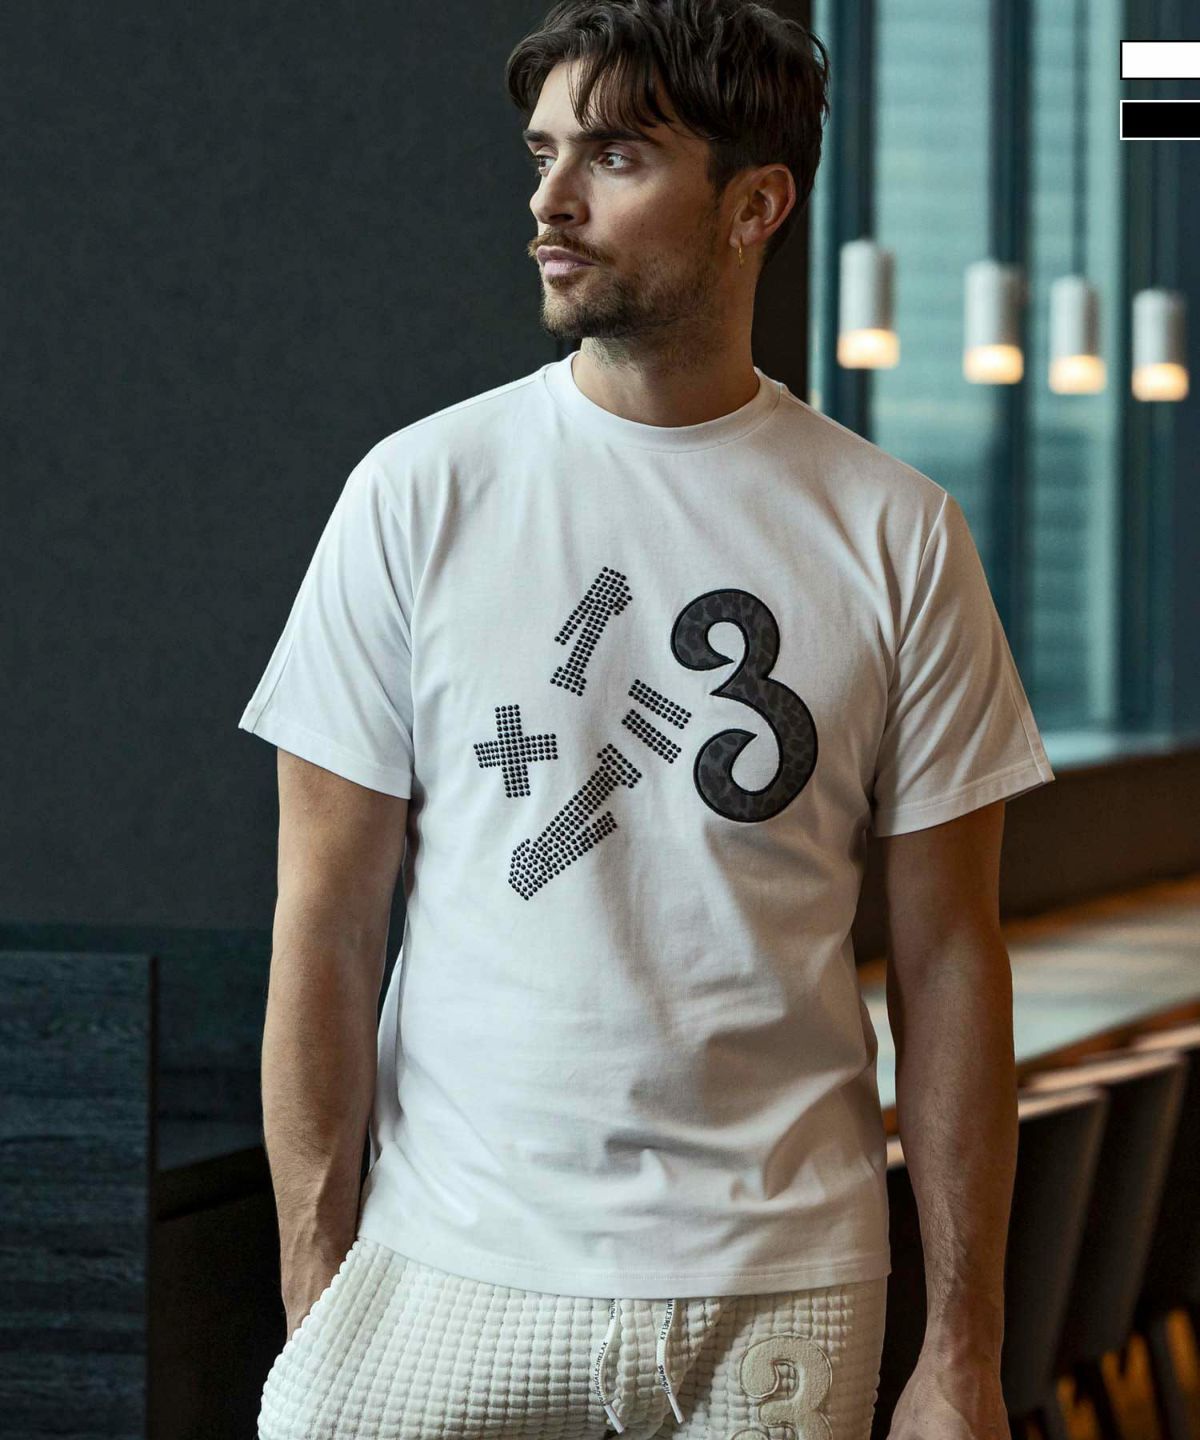 1PIU1UGUALE3 RELAX(ウノピゥウノウグァーレトレ リラックス)レオパード×シルバーストーンロゴ半袖Tシャツ